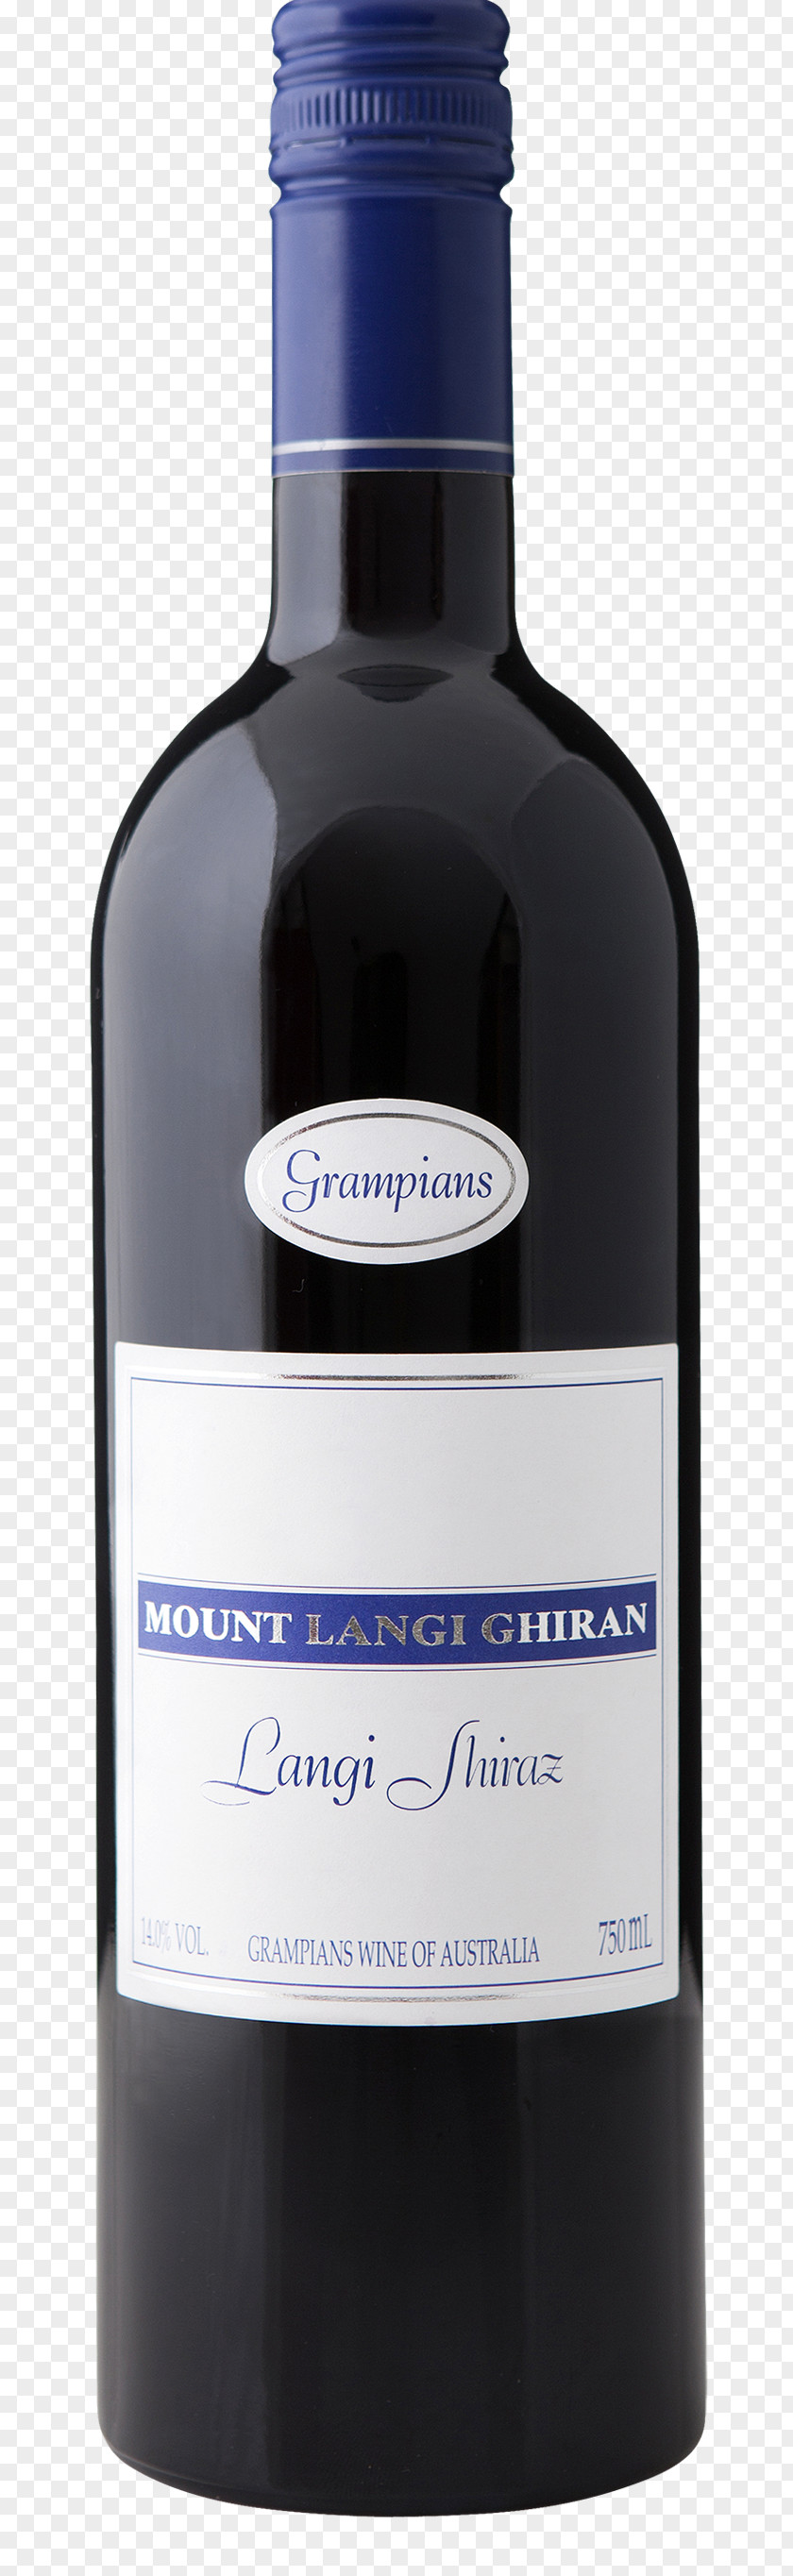 Cliffhanger Pinot Grigio Hollows Shiraz Mount Langi Ghiran Red Wine Liqueur PNG